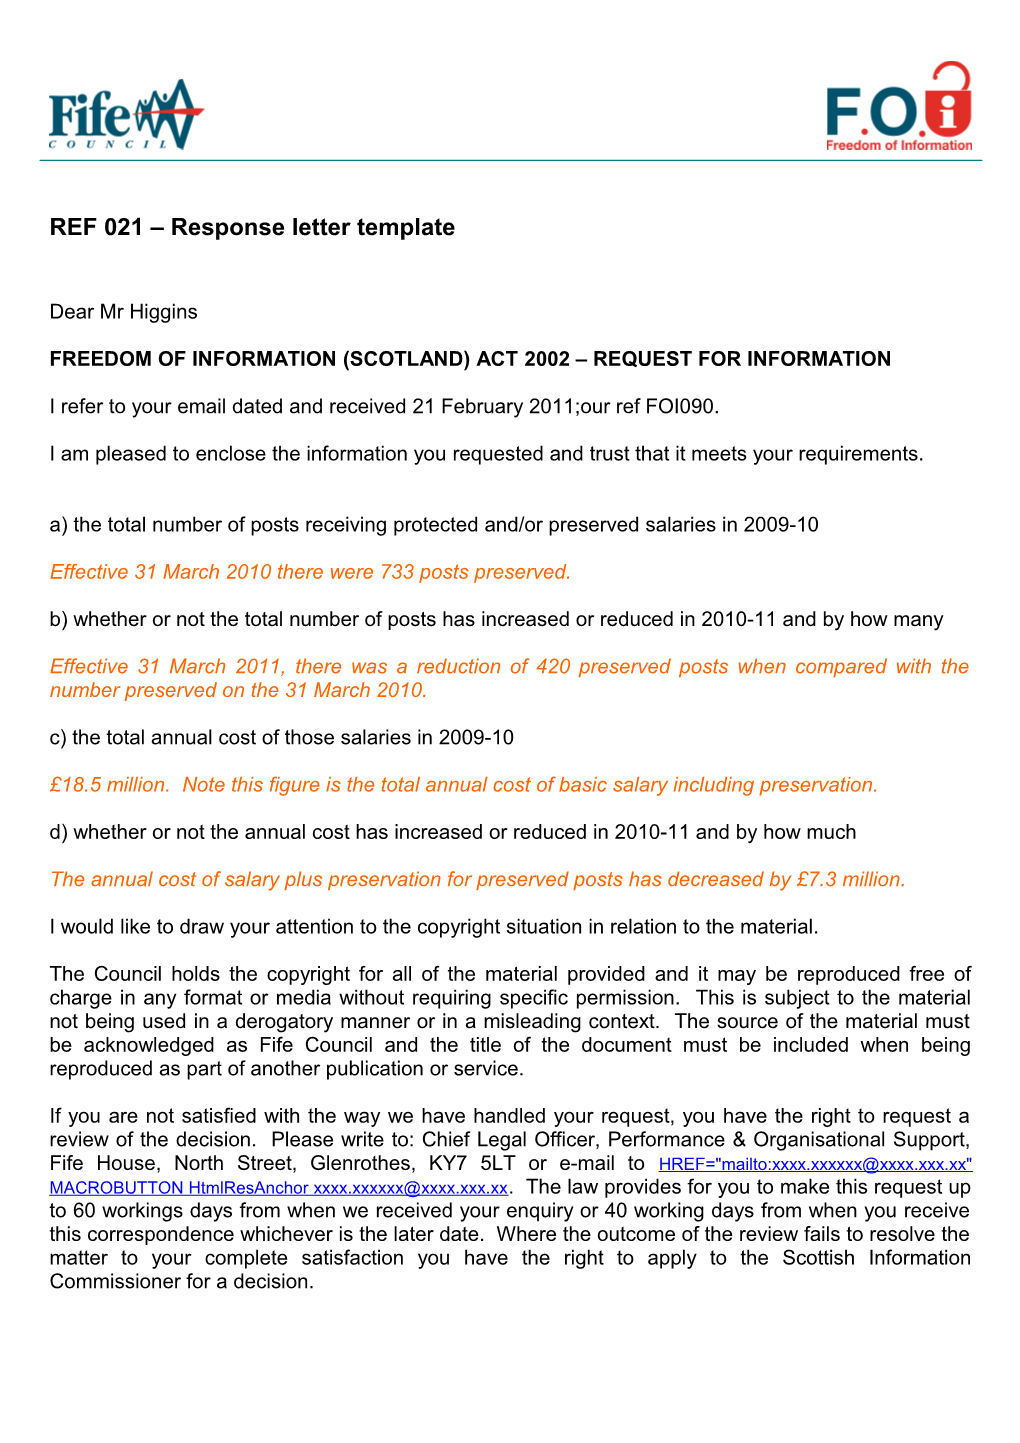 REF 019 Response Letter Template